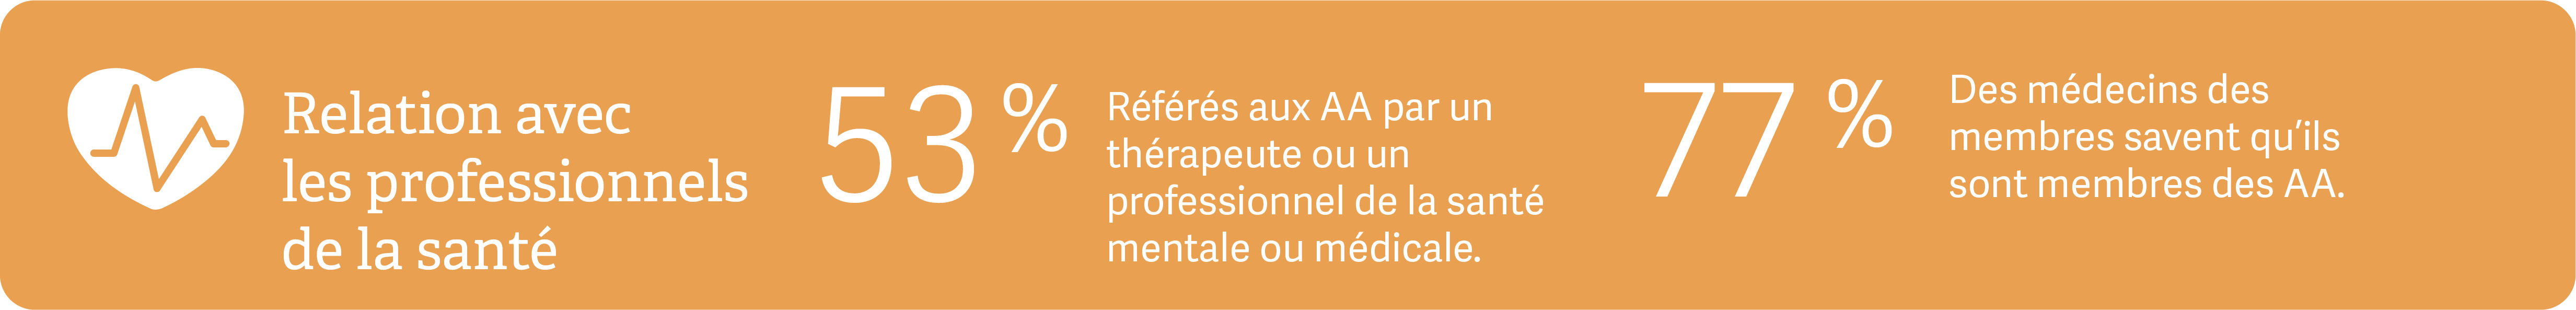 desktop French healthcare